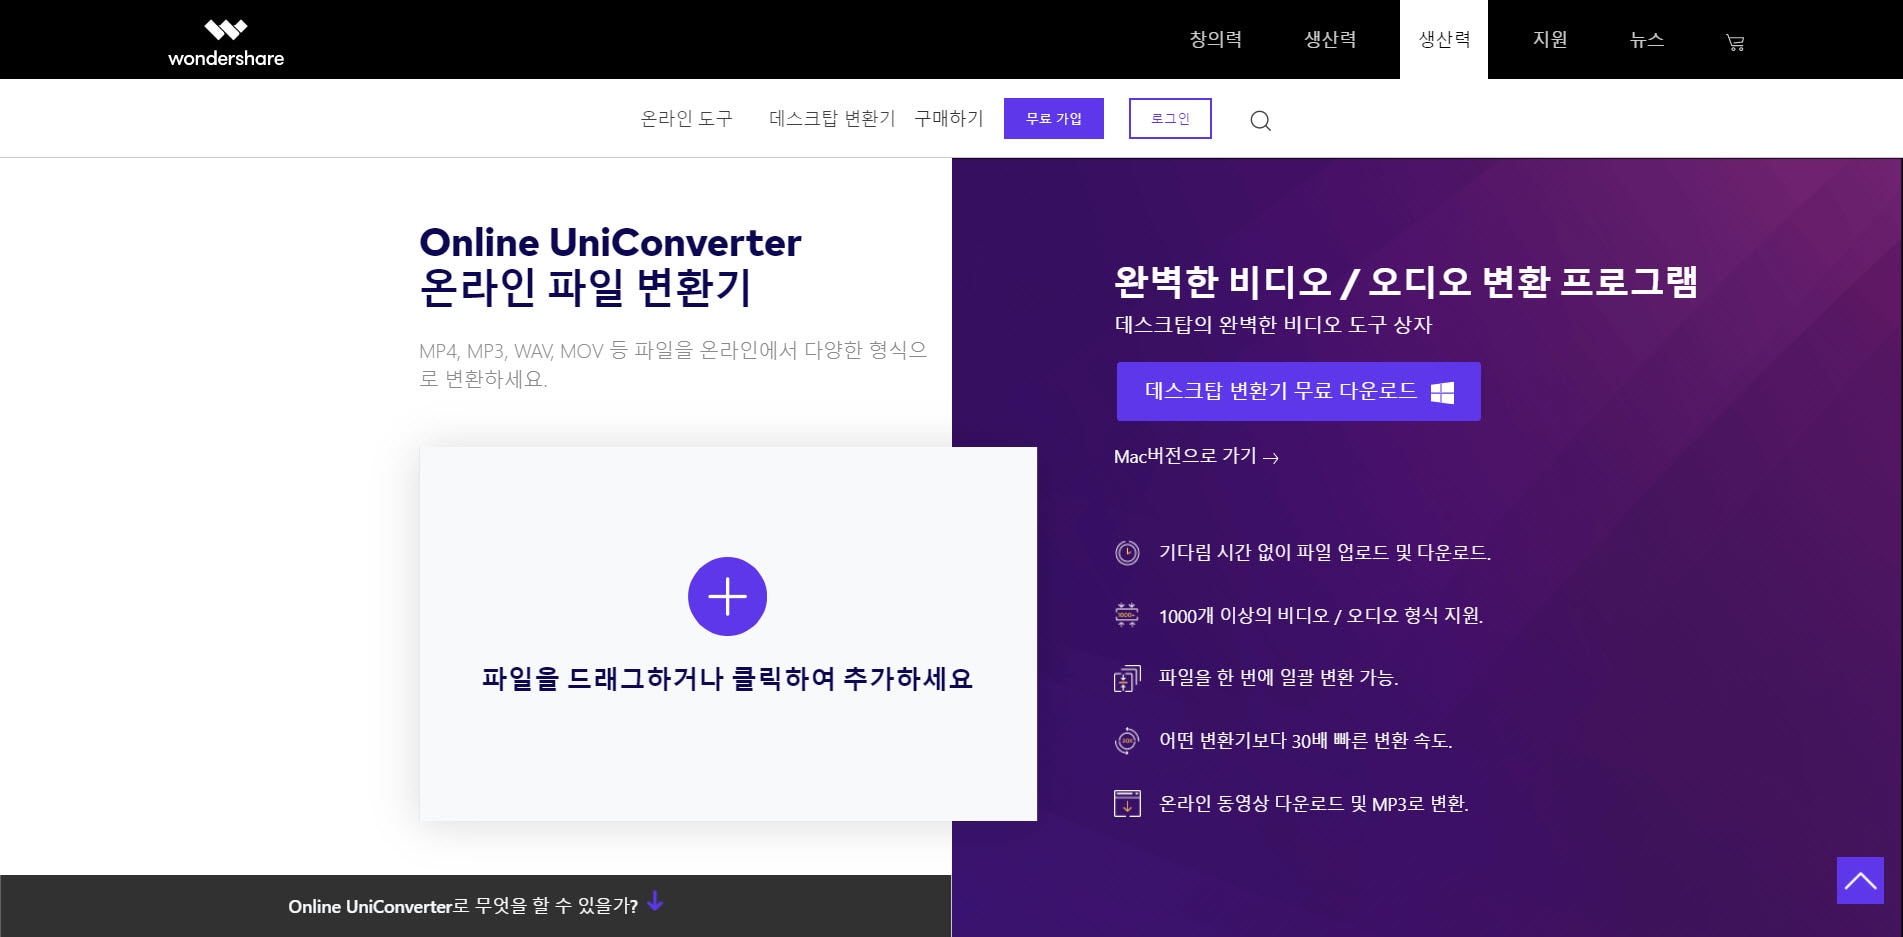 Online UniConverter